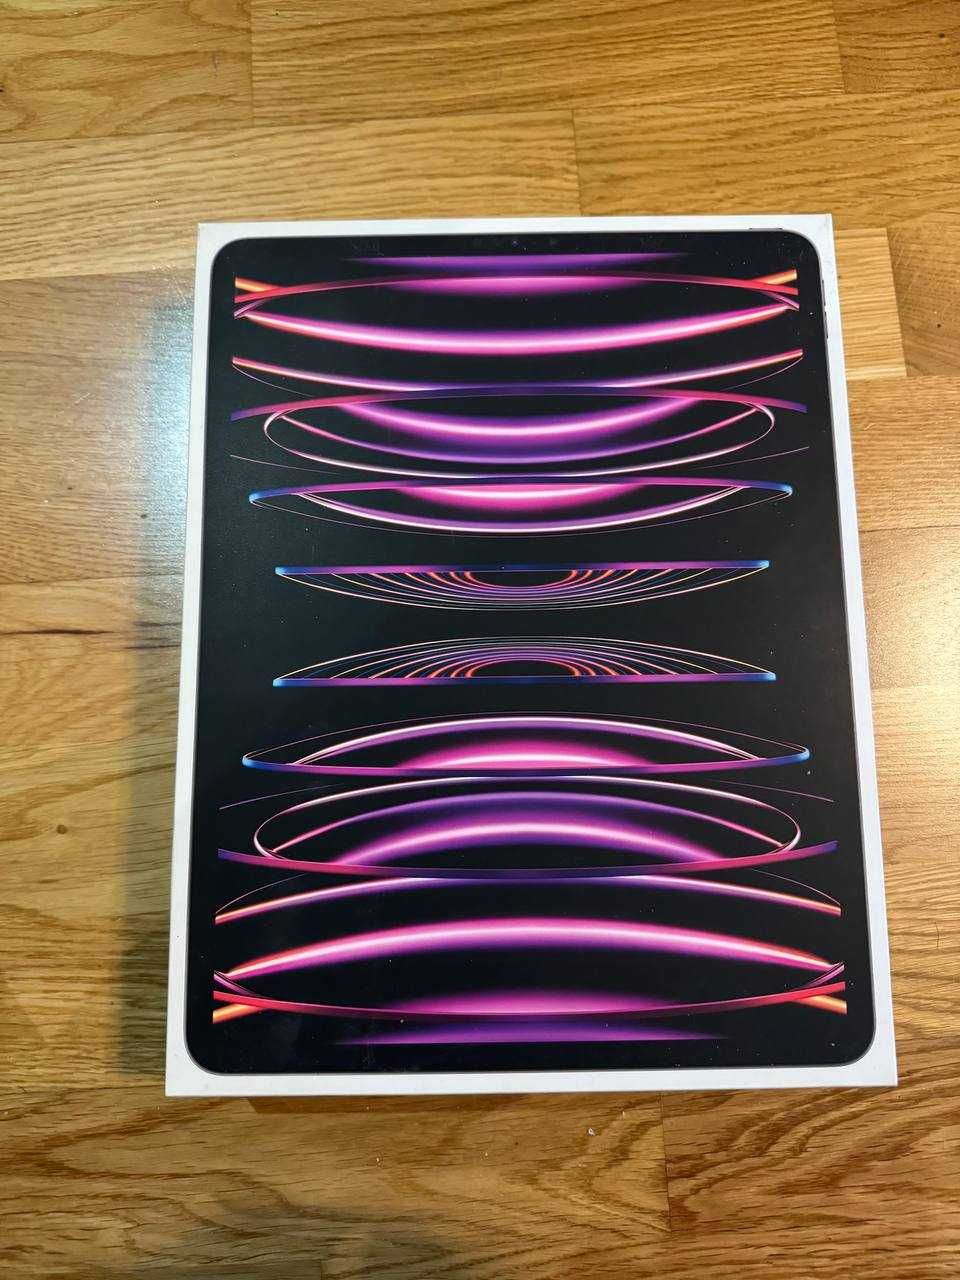 Новий! 2022 12.9-inch iPad Pro (Wi-Fi + Cellular, 2TB) - Space Gray